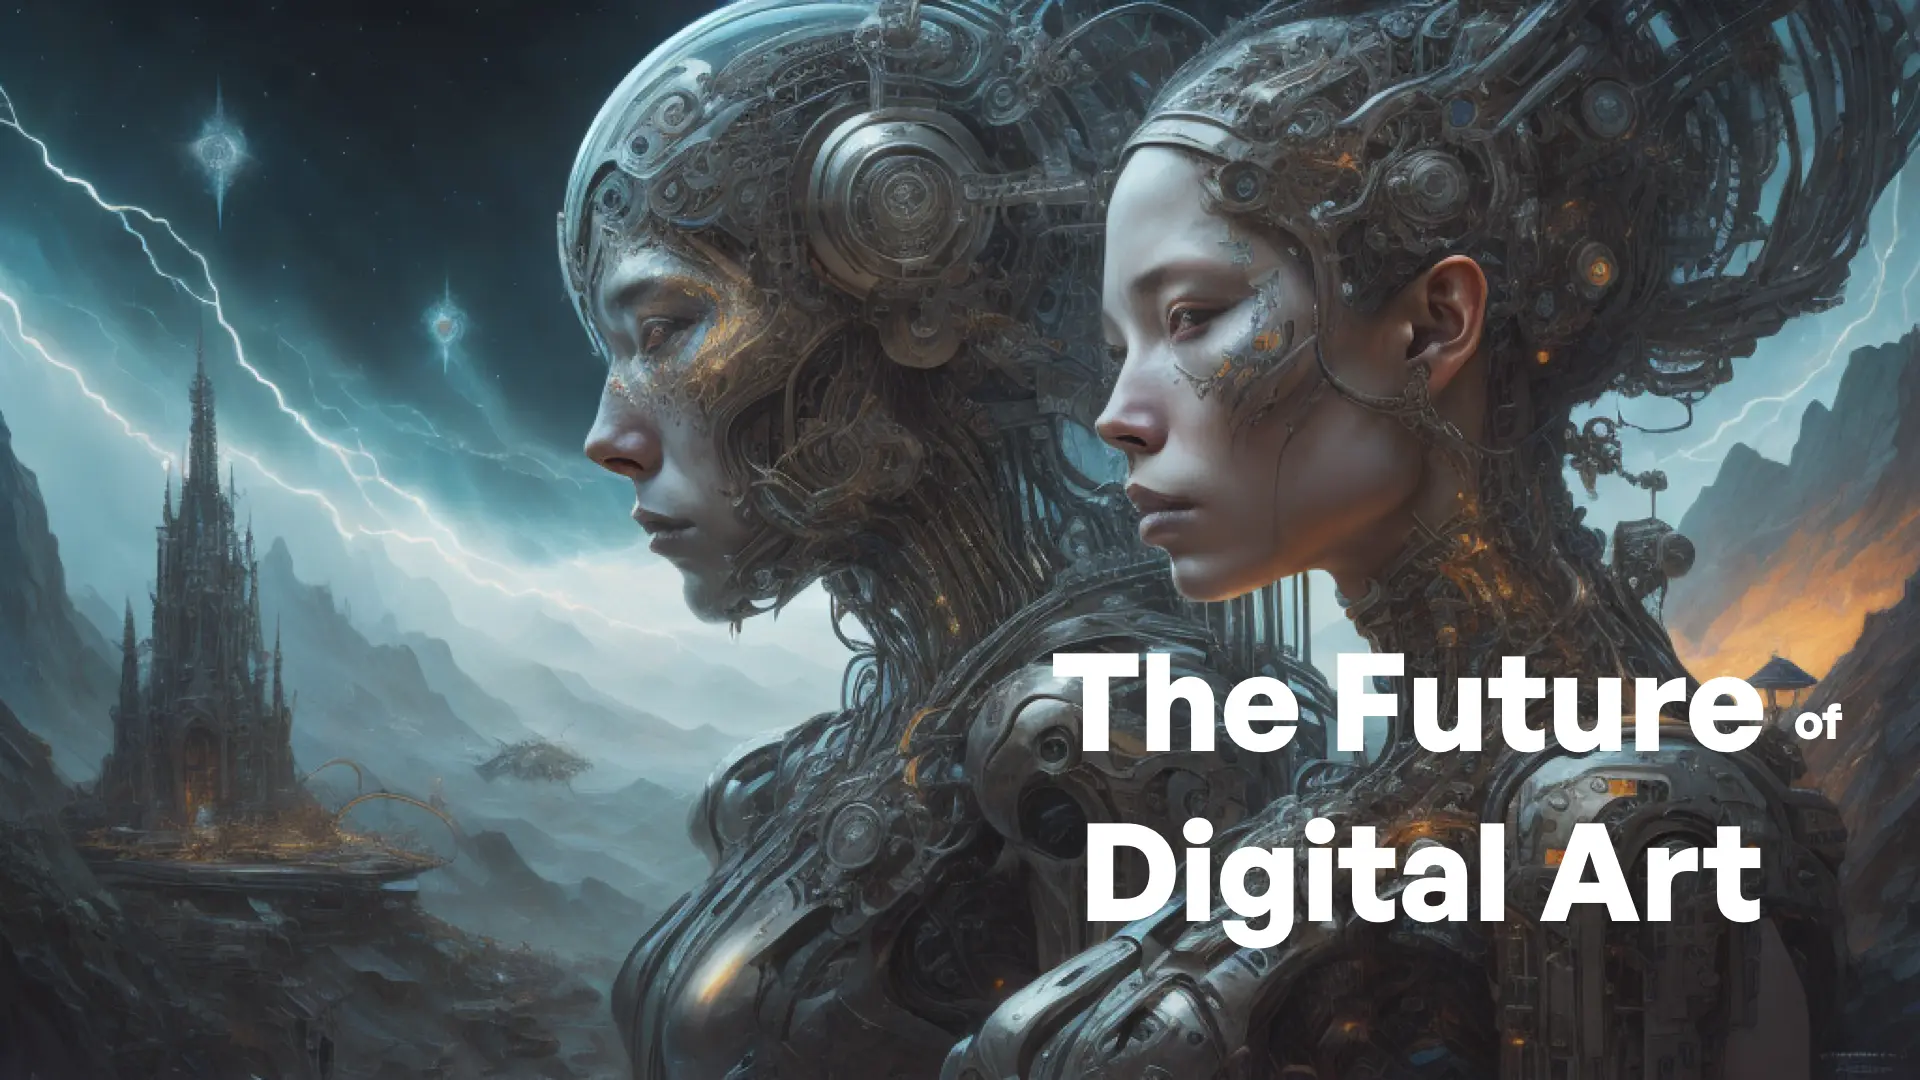 The Future of Digital Art